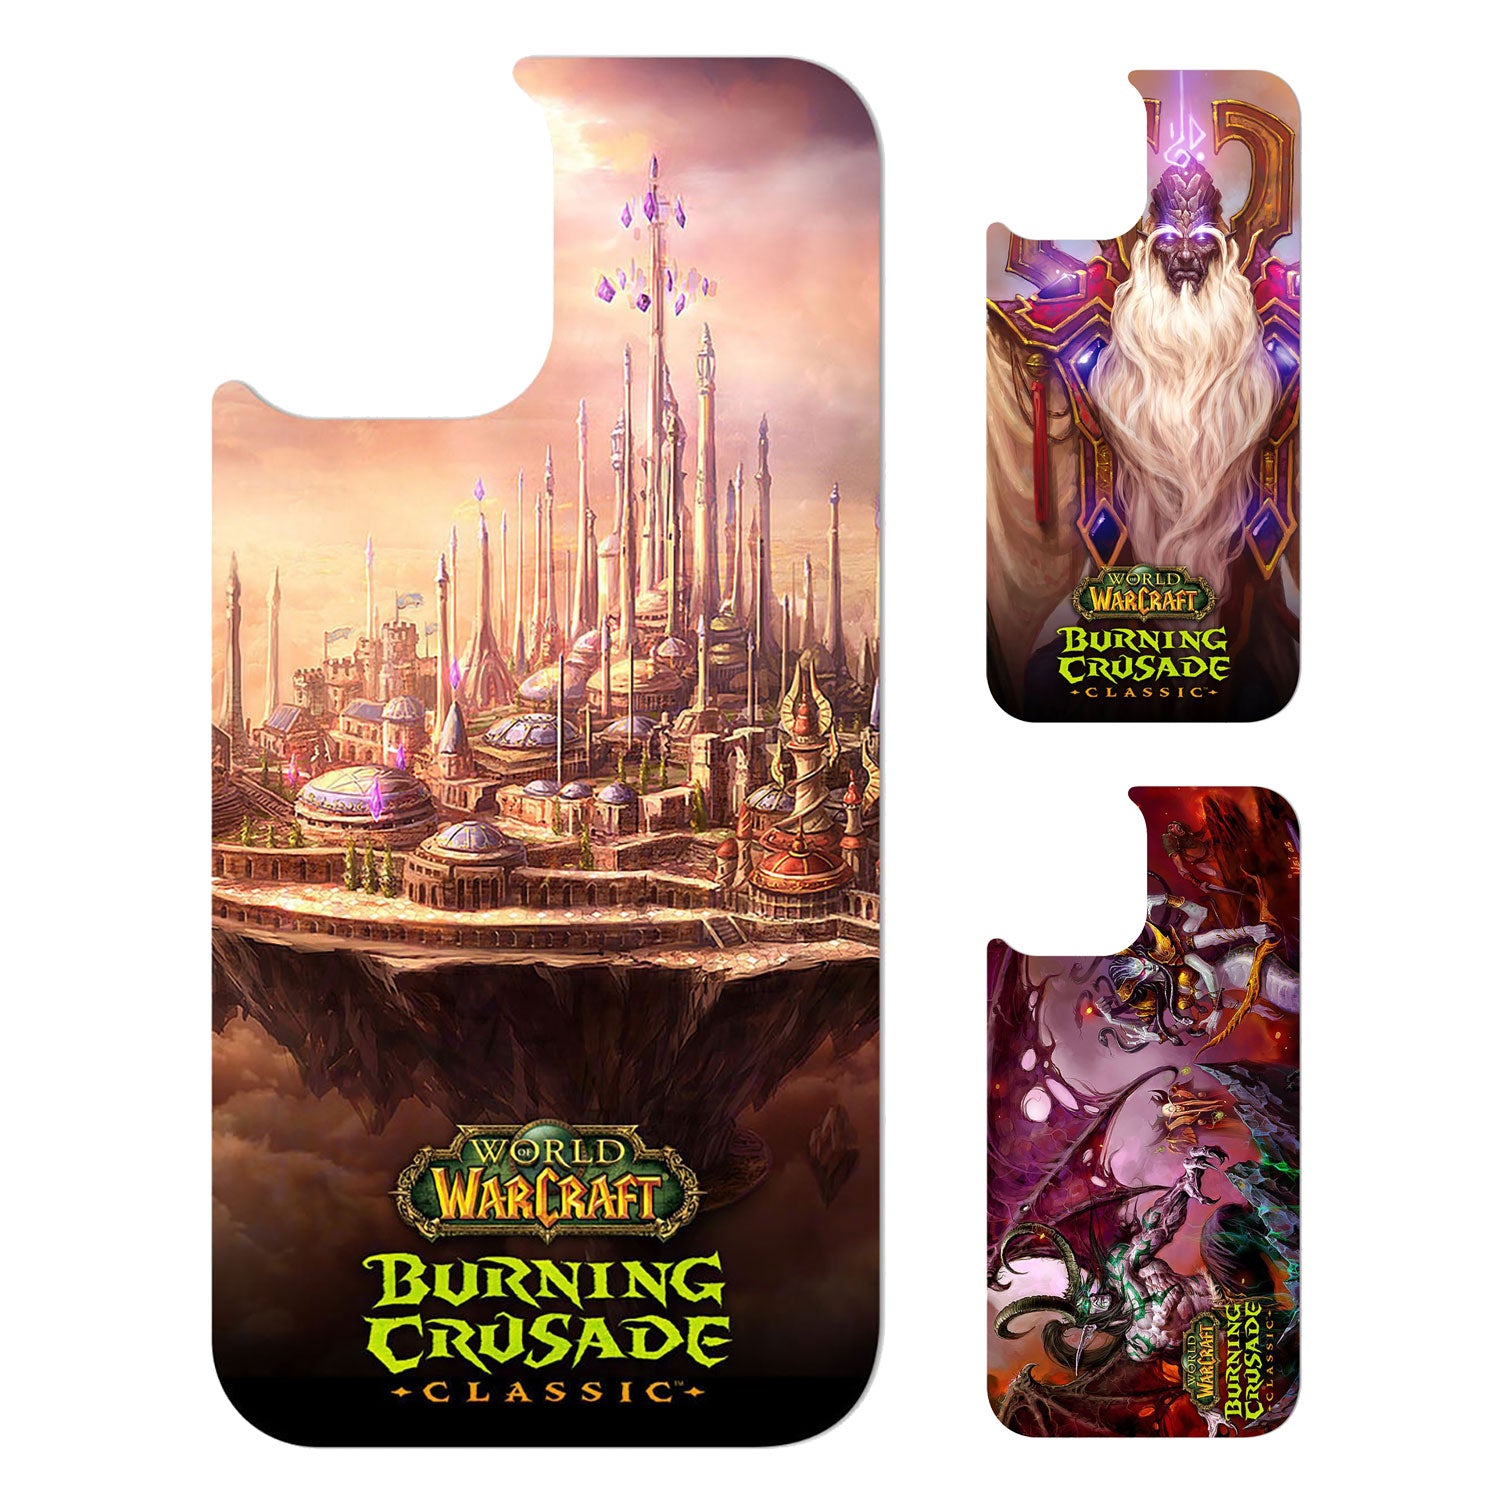 World of Warcraft Burning Crusade Classic V2 InfiniteSwap Phone Pack - Main Image